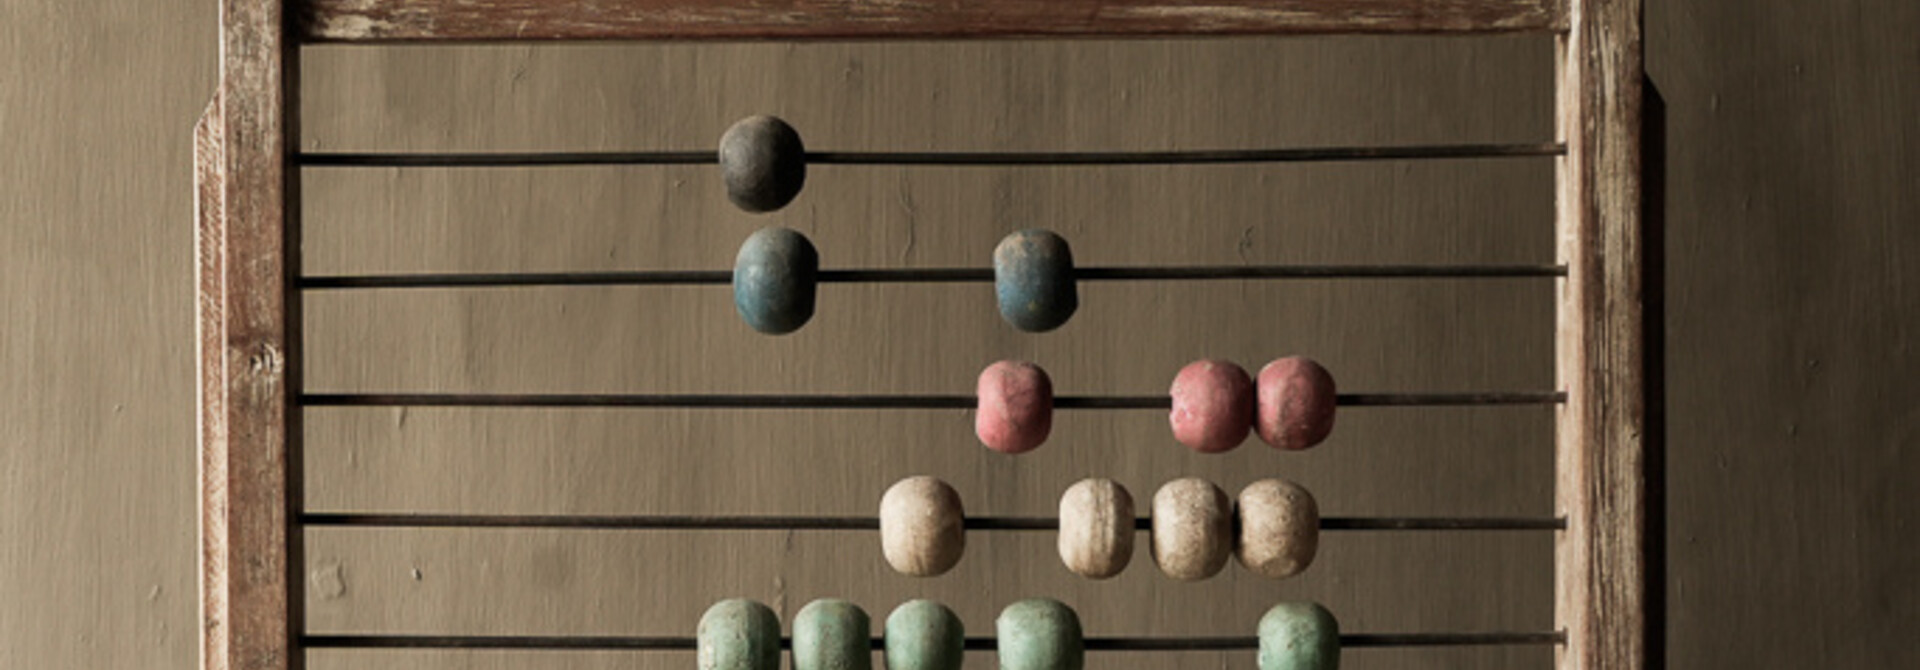 Unique old abacus